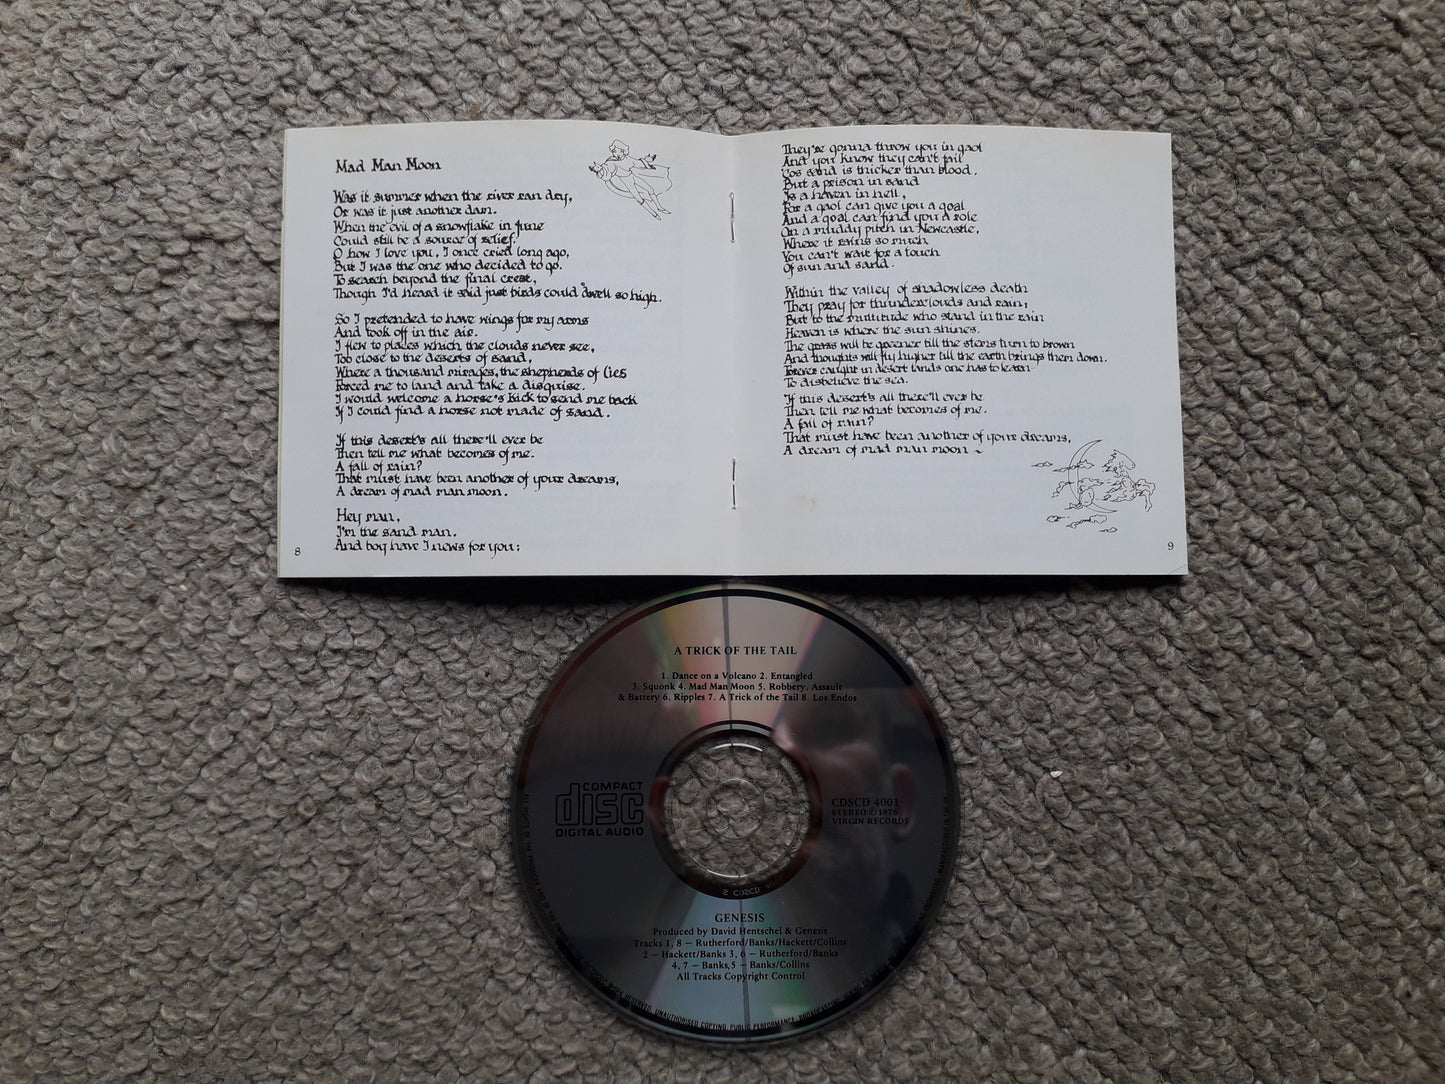 Genesis-A Trick Of The Tail CD (CDSCD 4001)